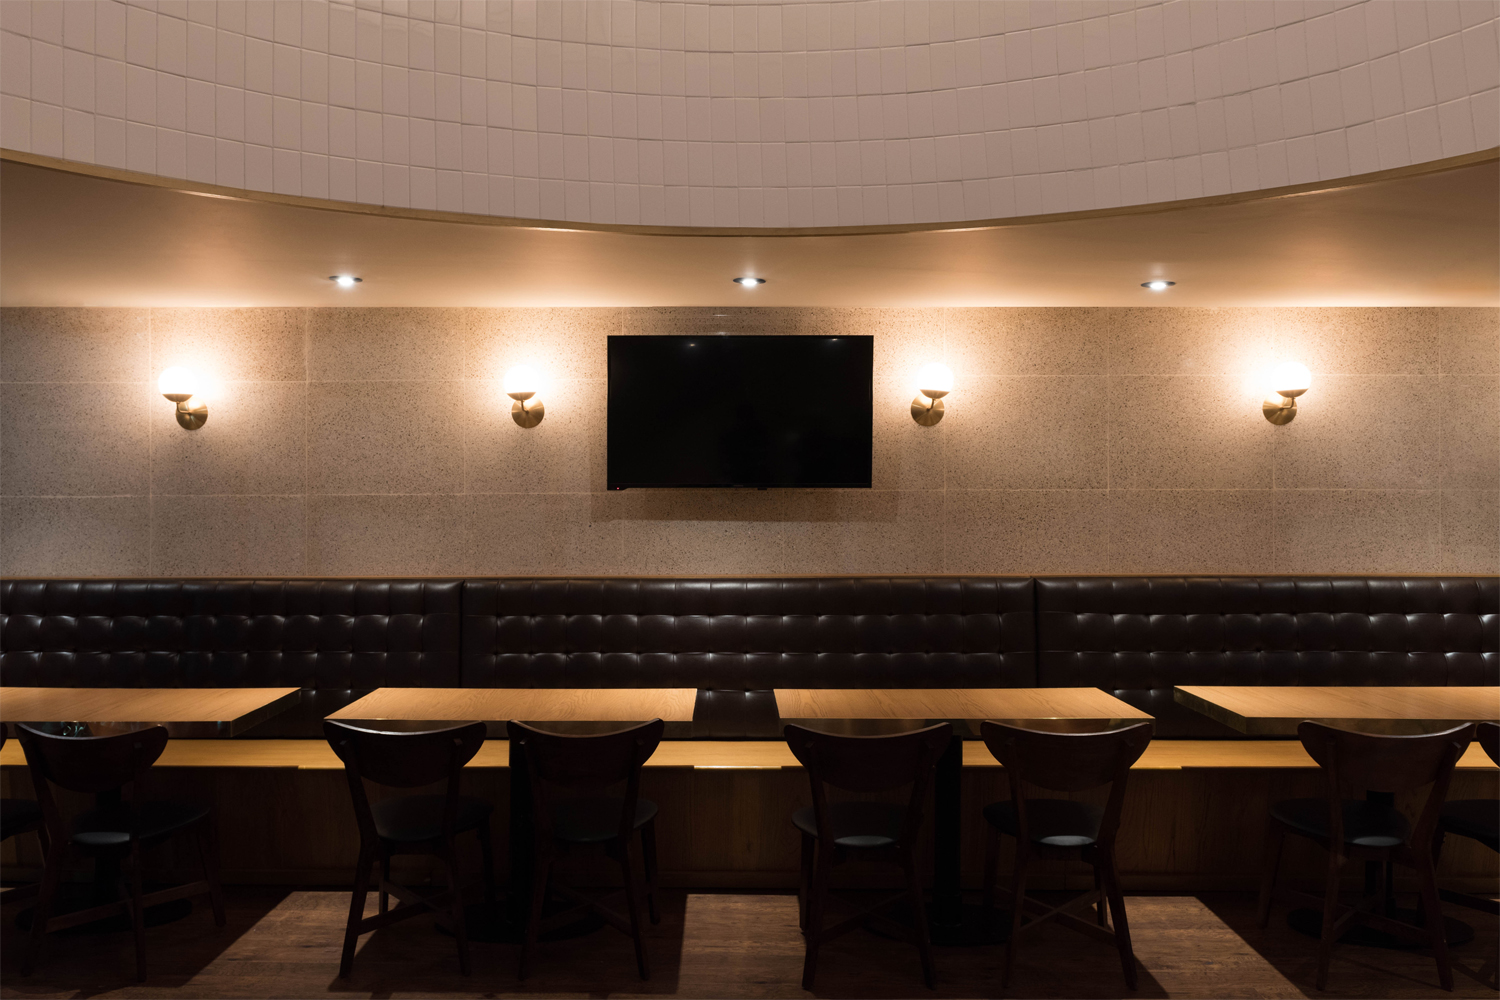 Interior design by Anagrama for San Pedro based burger bar Orson